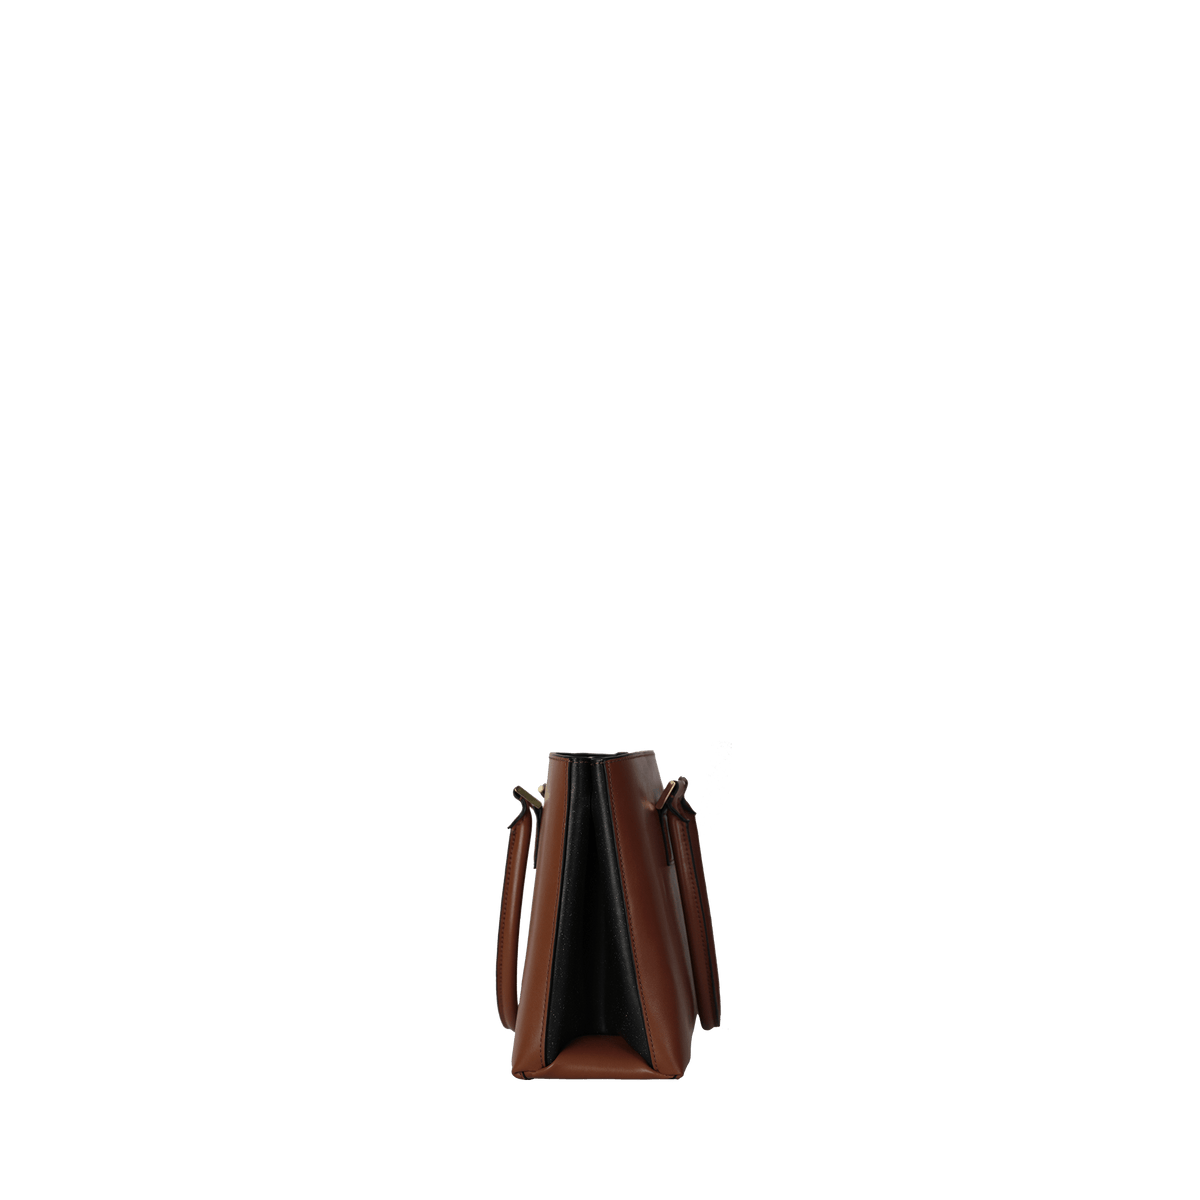 Another Bailey Vegan Mirum Leather Handbag